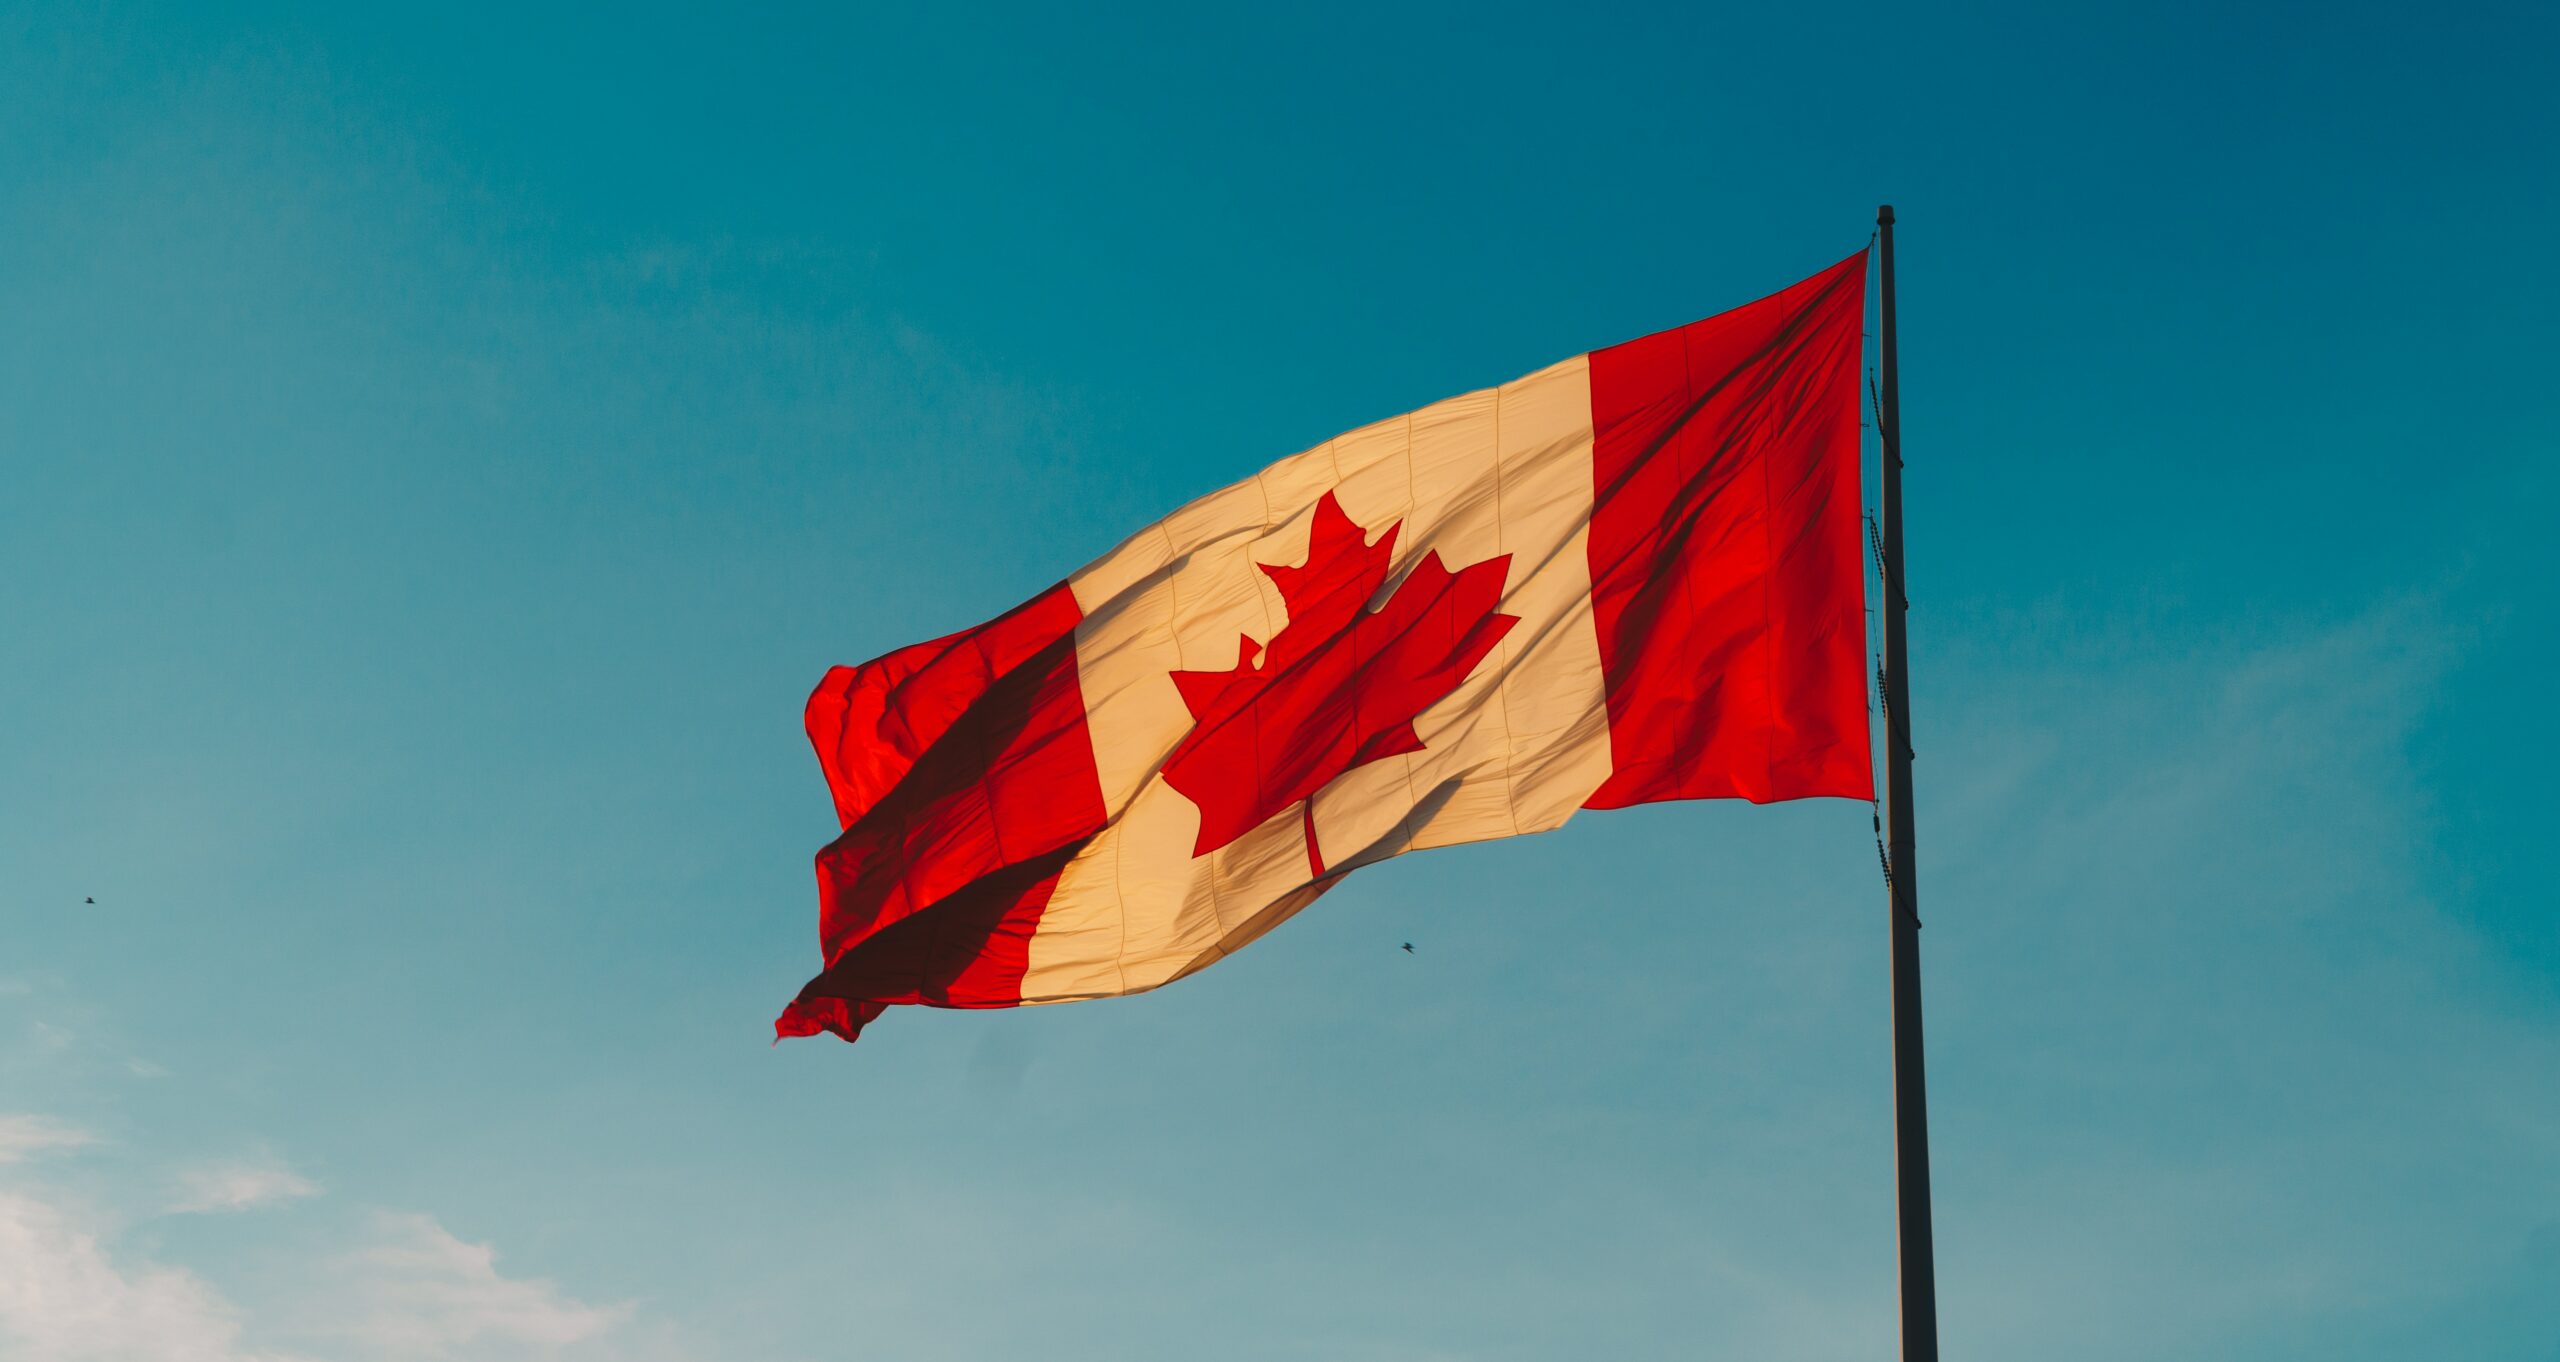 A Canadian flag flying against a blue sky